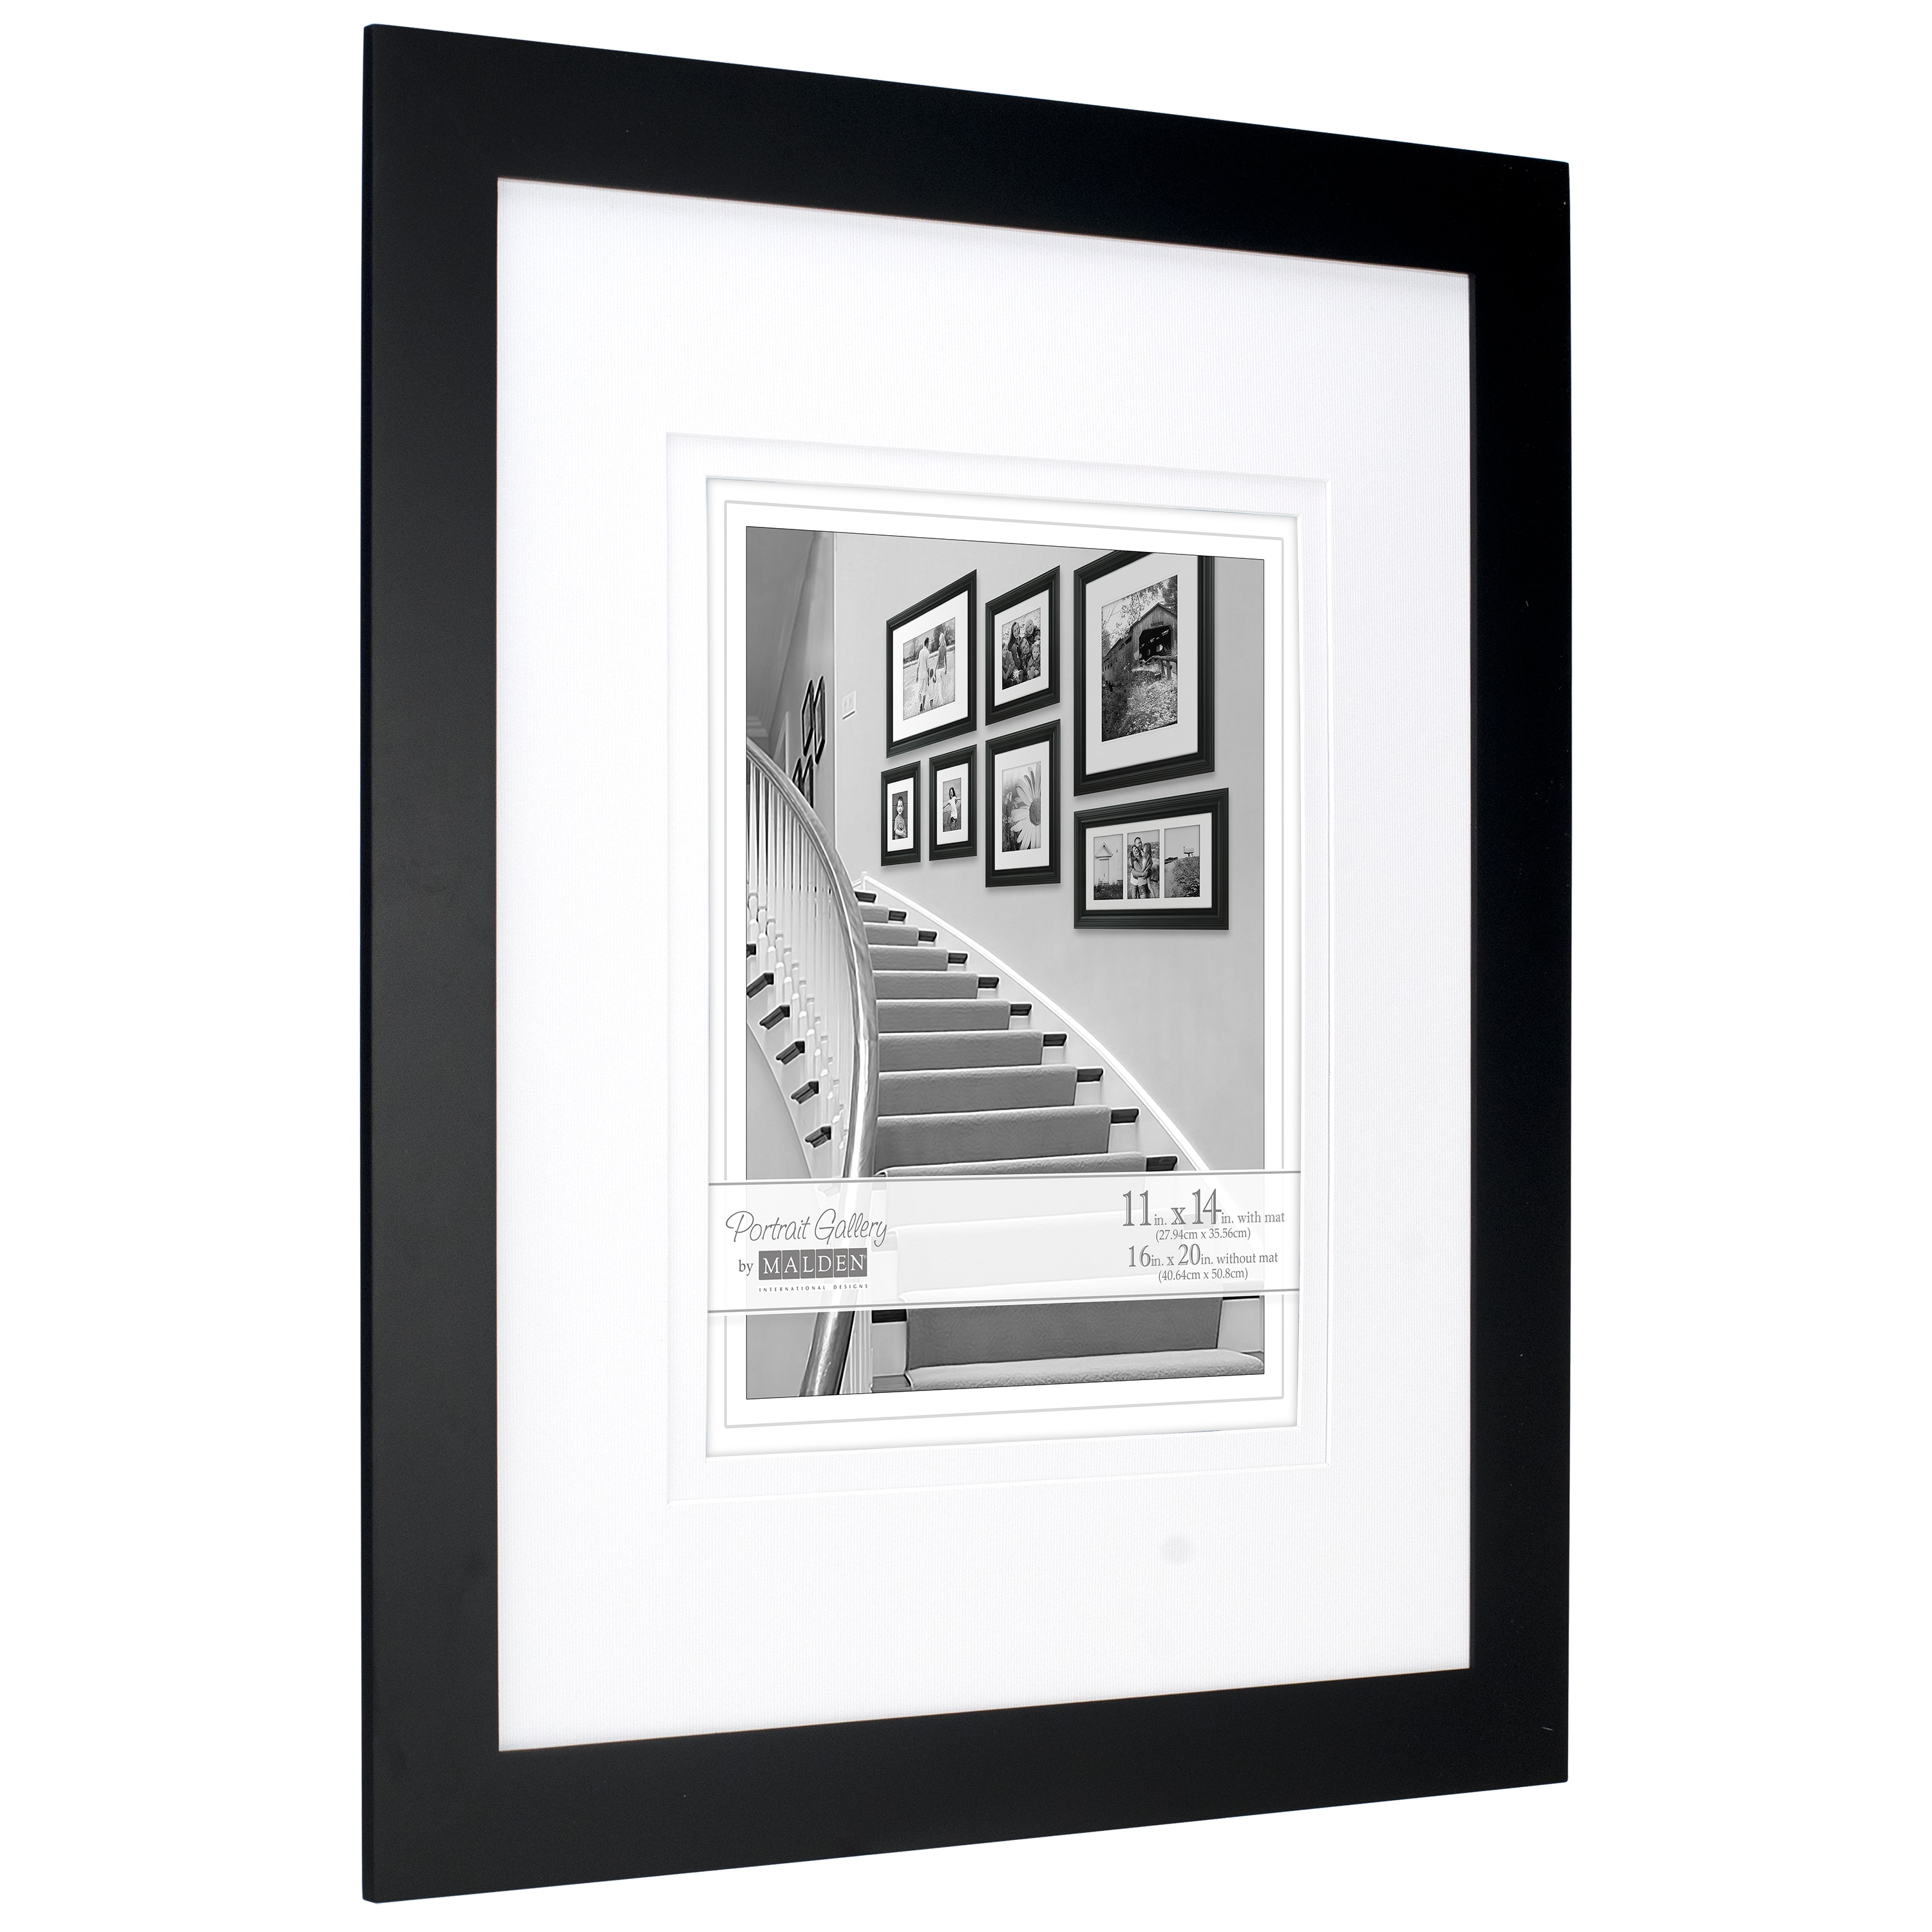 Malden International Designs 11x14/8x10 Gray Matted Picture Frame